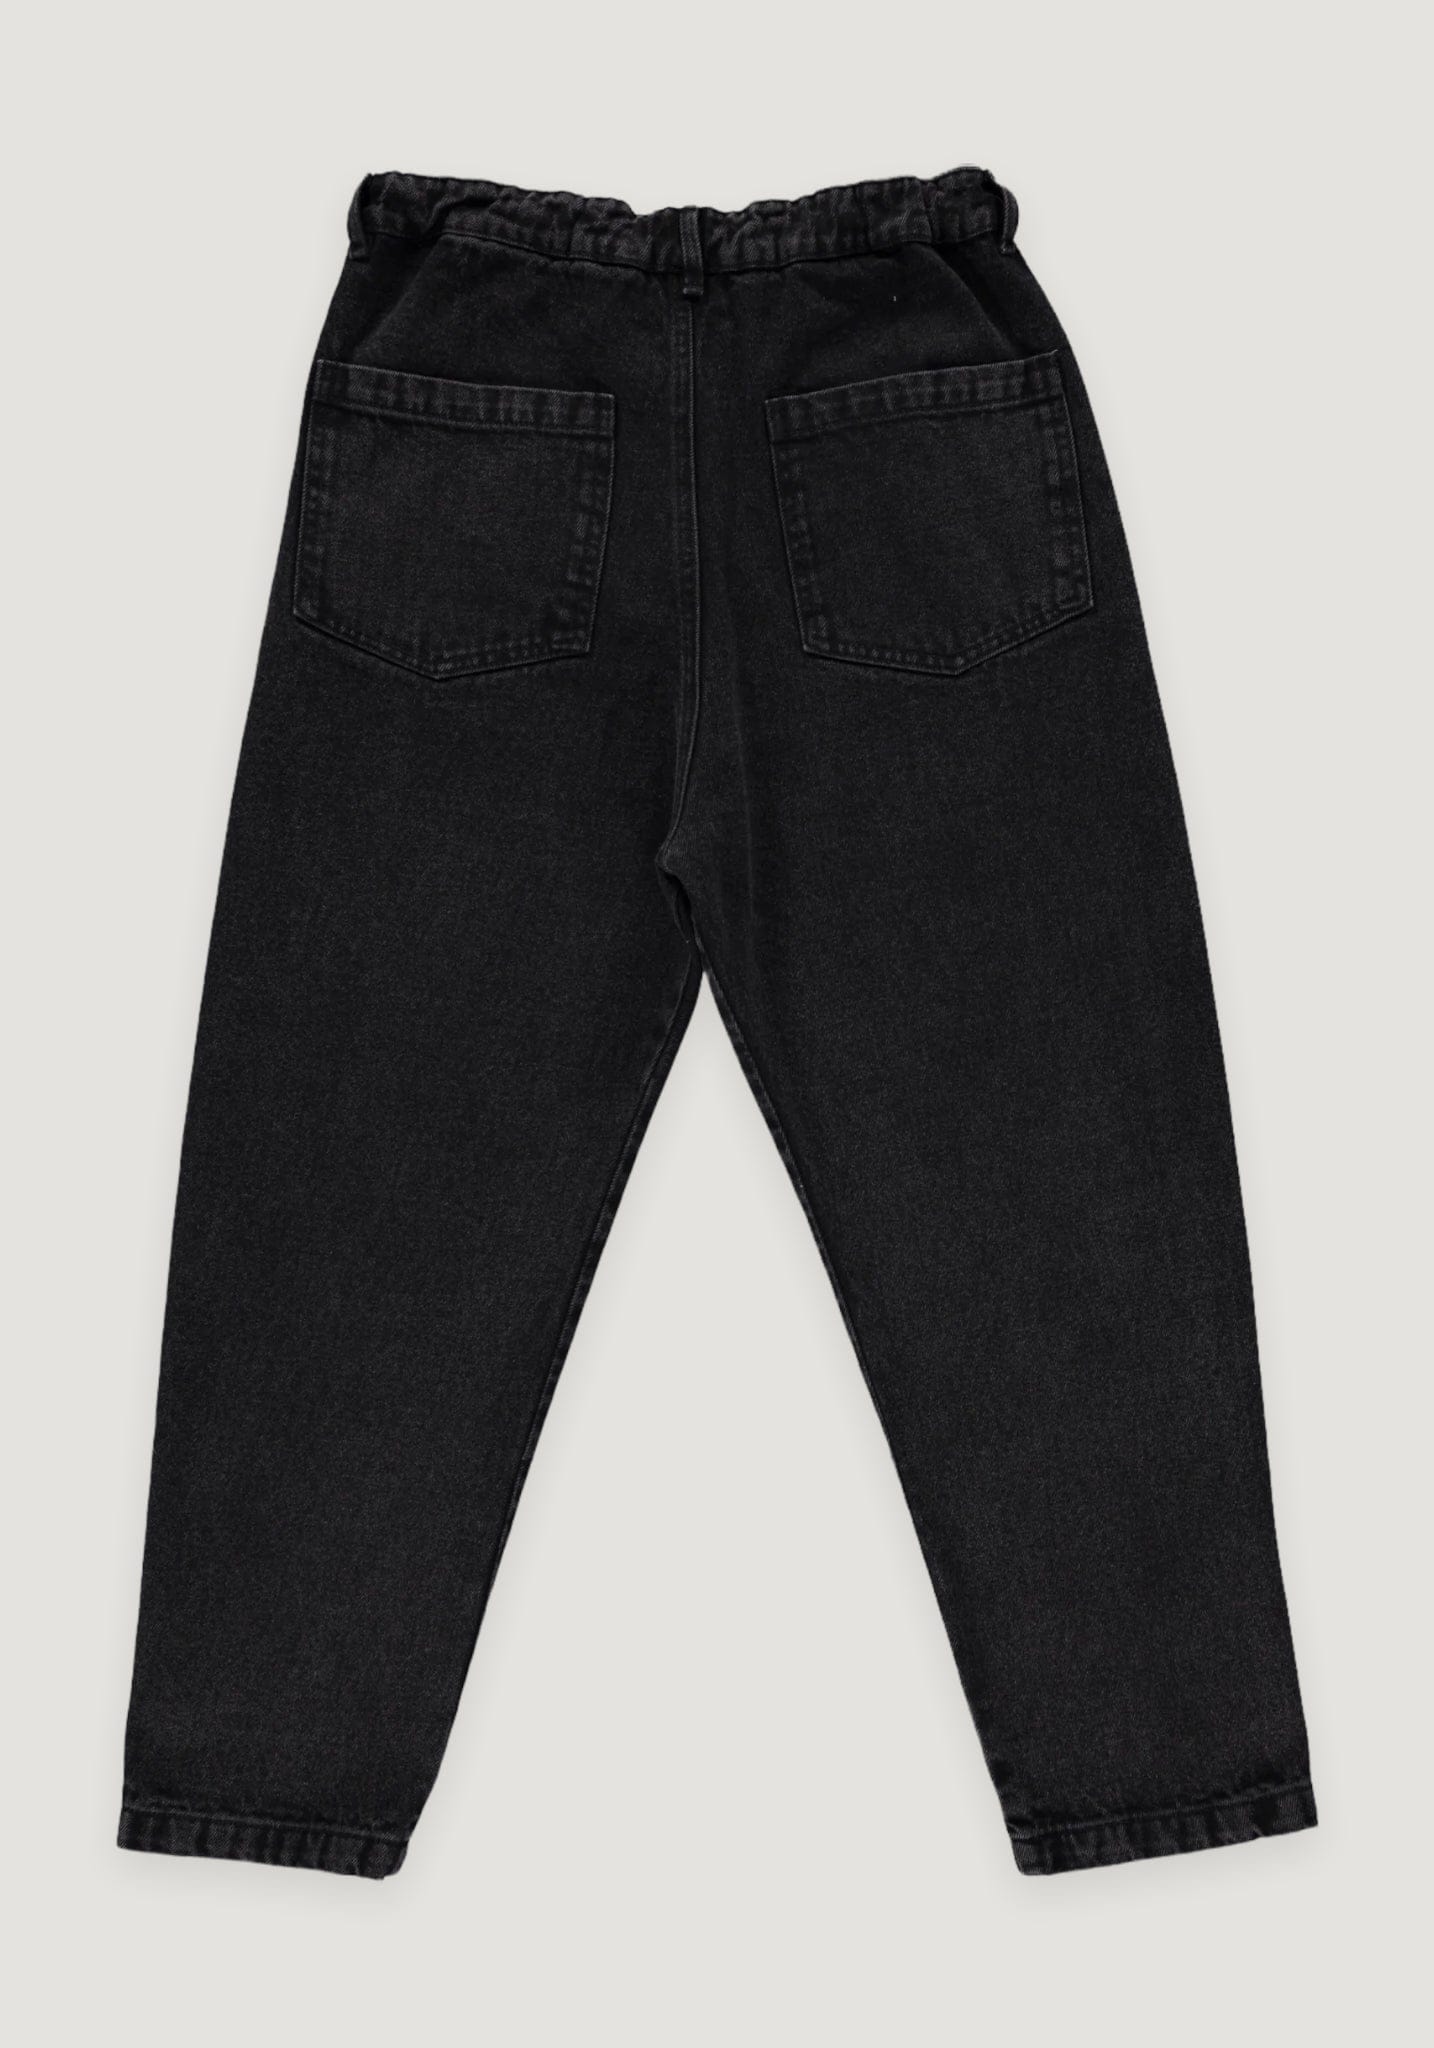 Pantaloni denim femei din bumbac - Carotte Noir Poudre Organic HipHip.ro